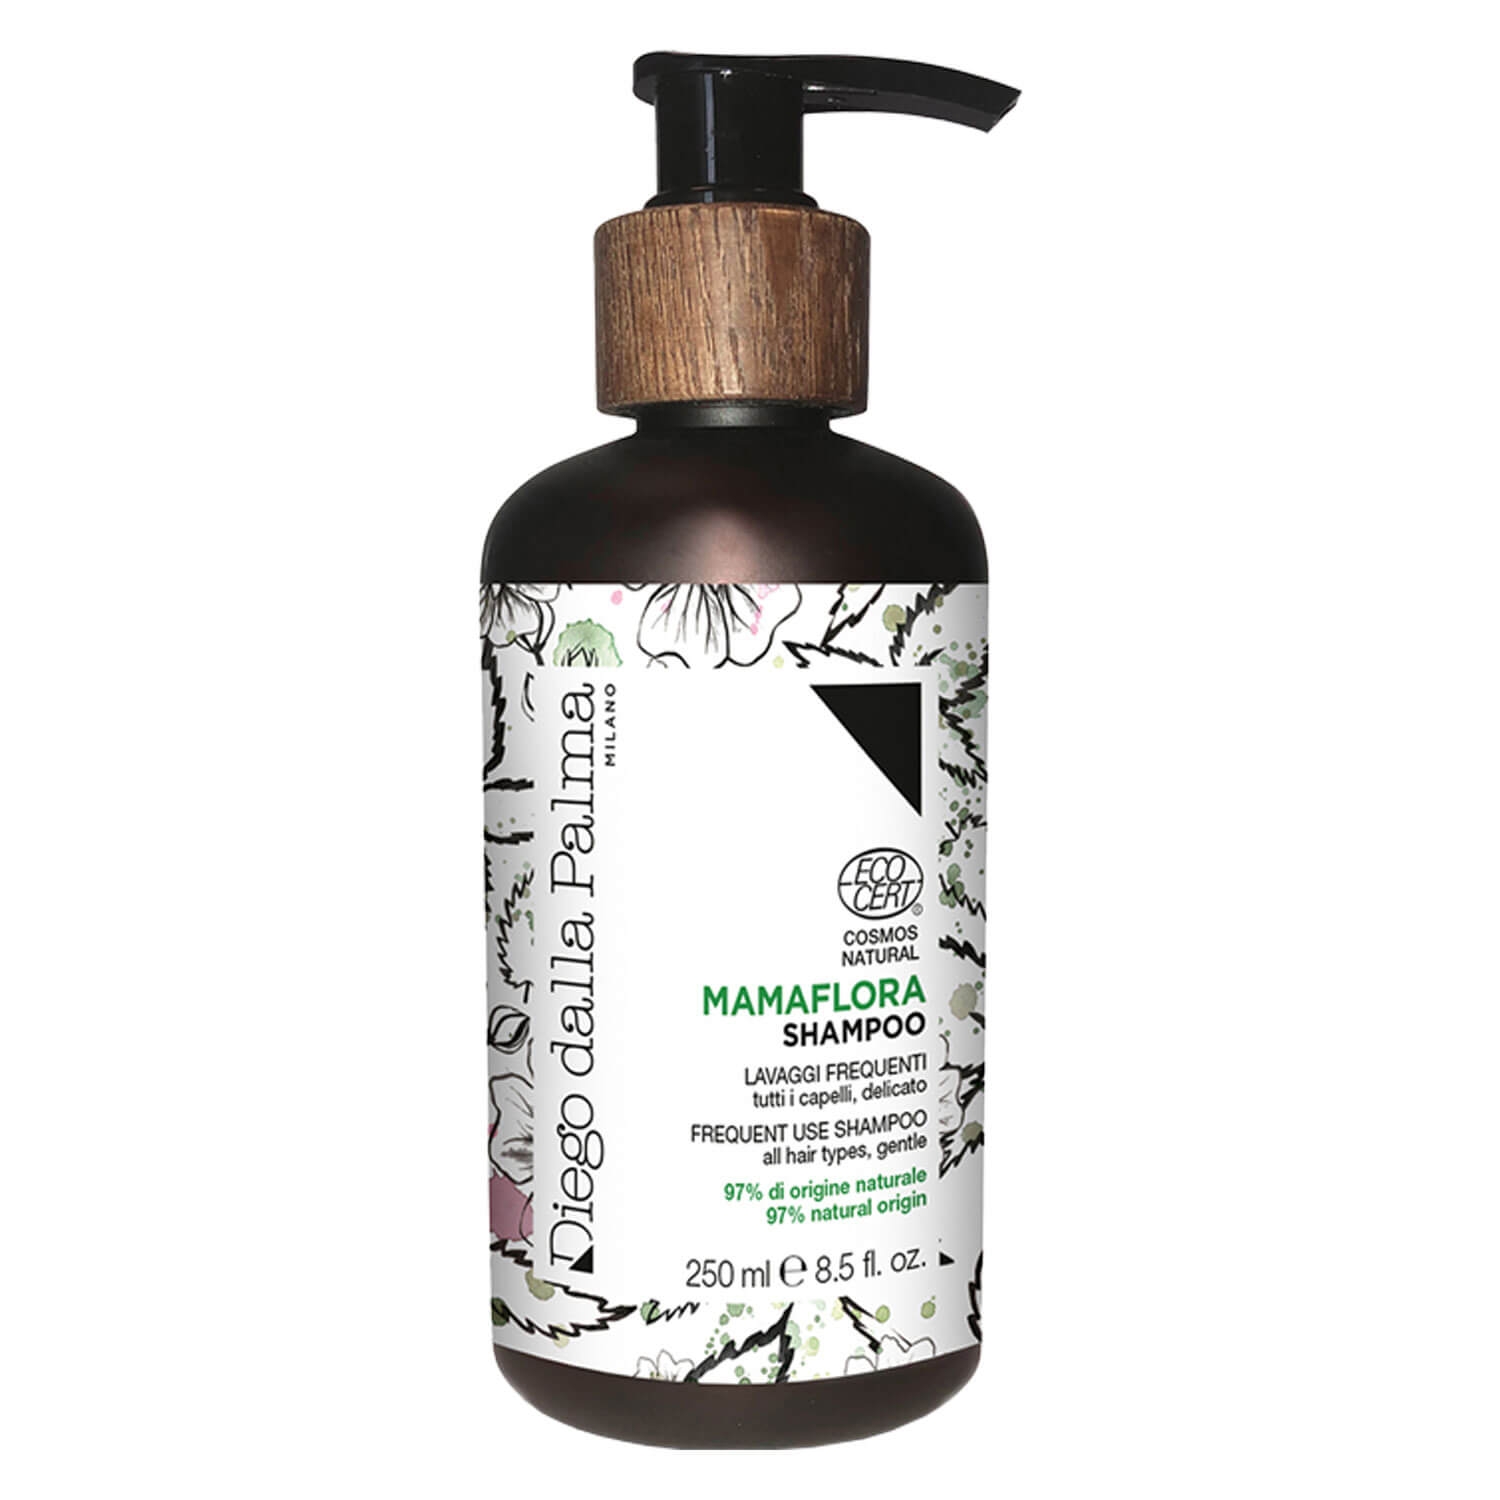 Produktbild von Diego dalla Palma Hair - Mamaflora Shampoo